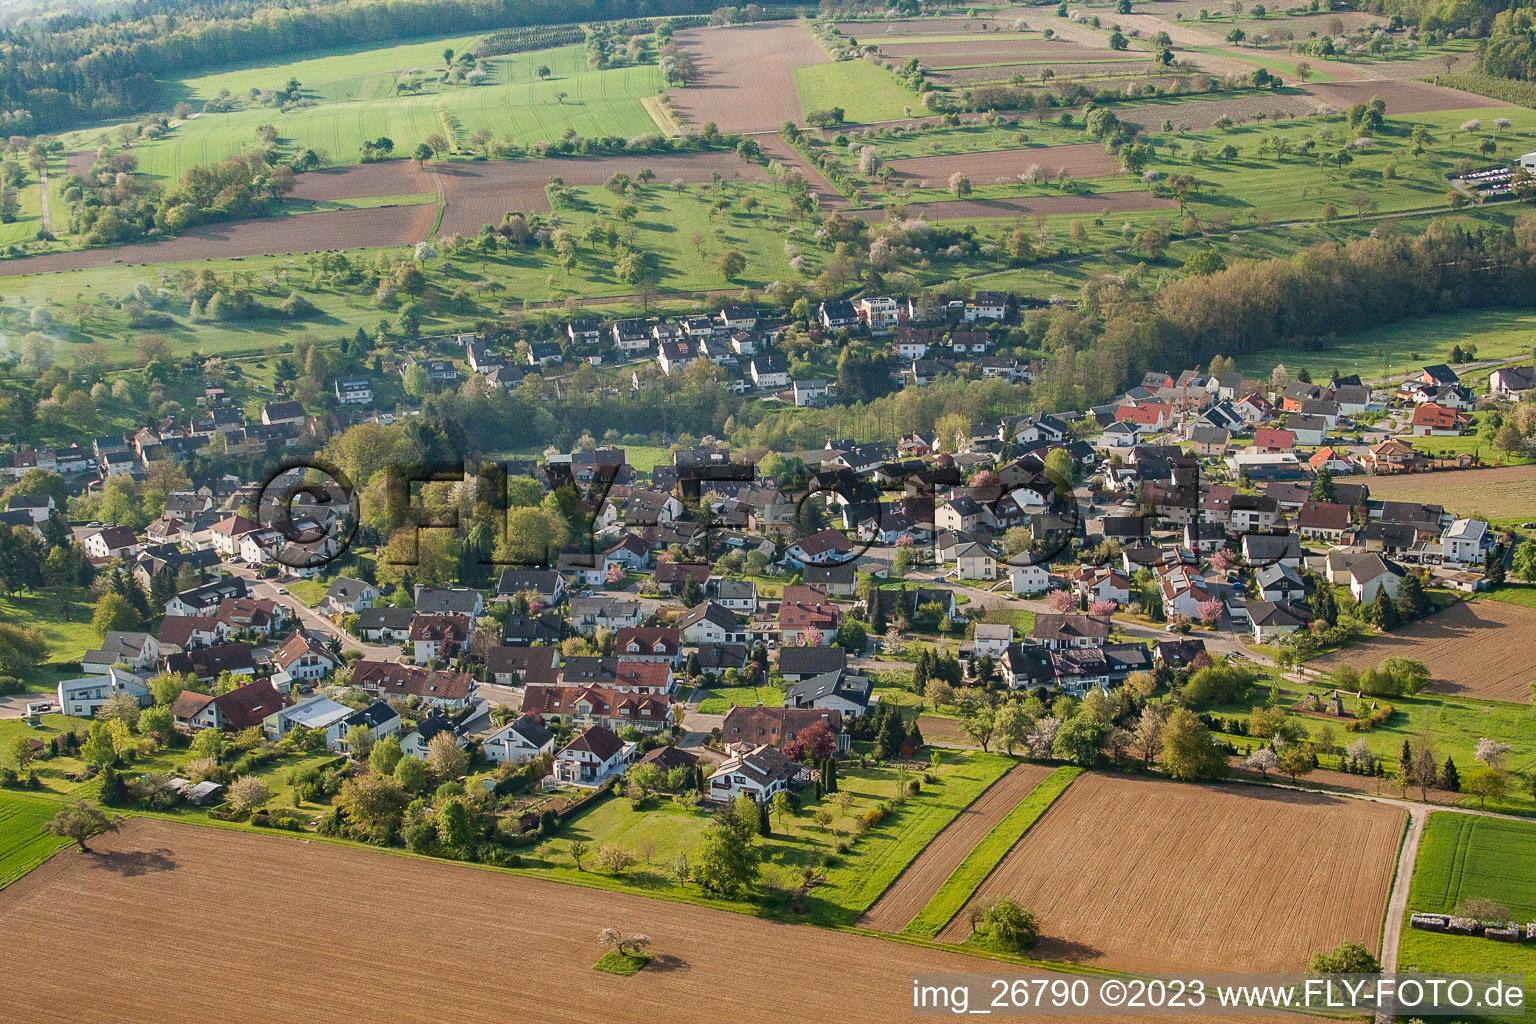 Aerial view of District Kleinsteinbach in Pfinztal in the state Baden-Wuerttemberg, Germany